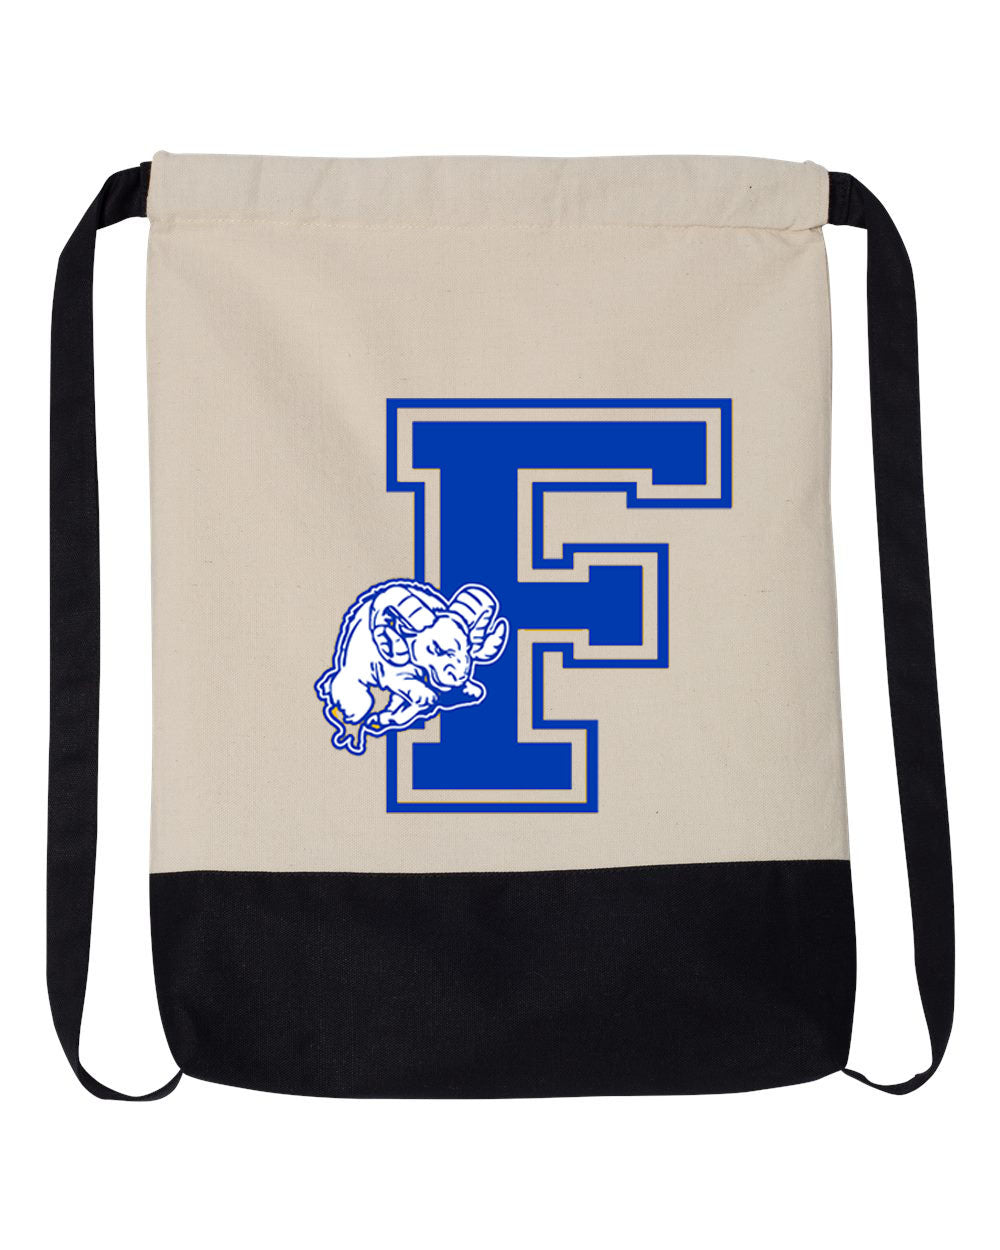 Franklin School design 1 Drawstring Bag